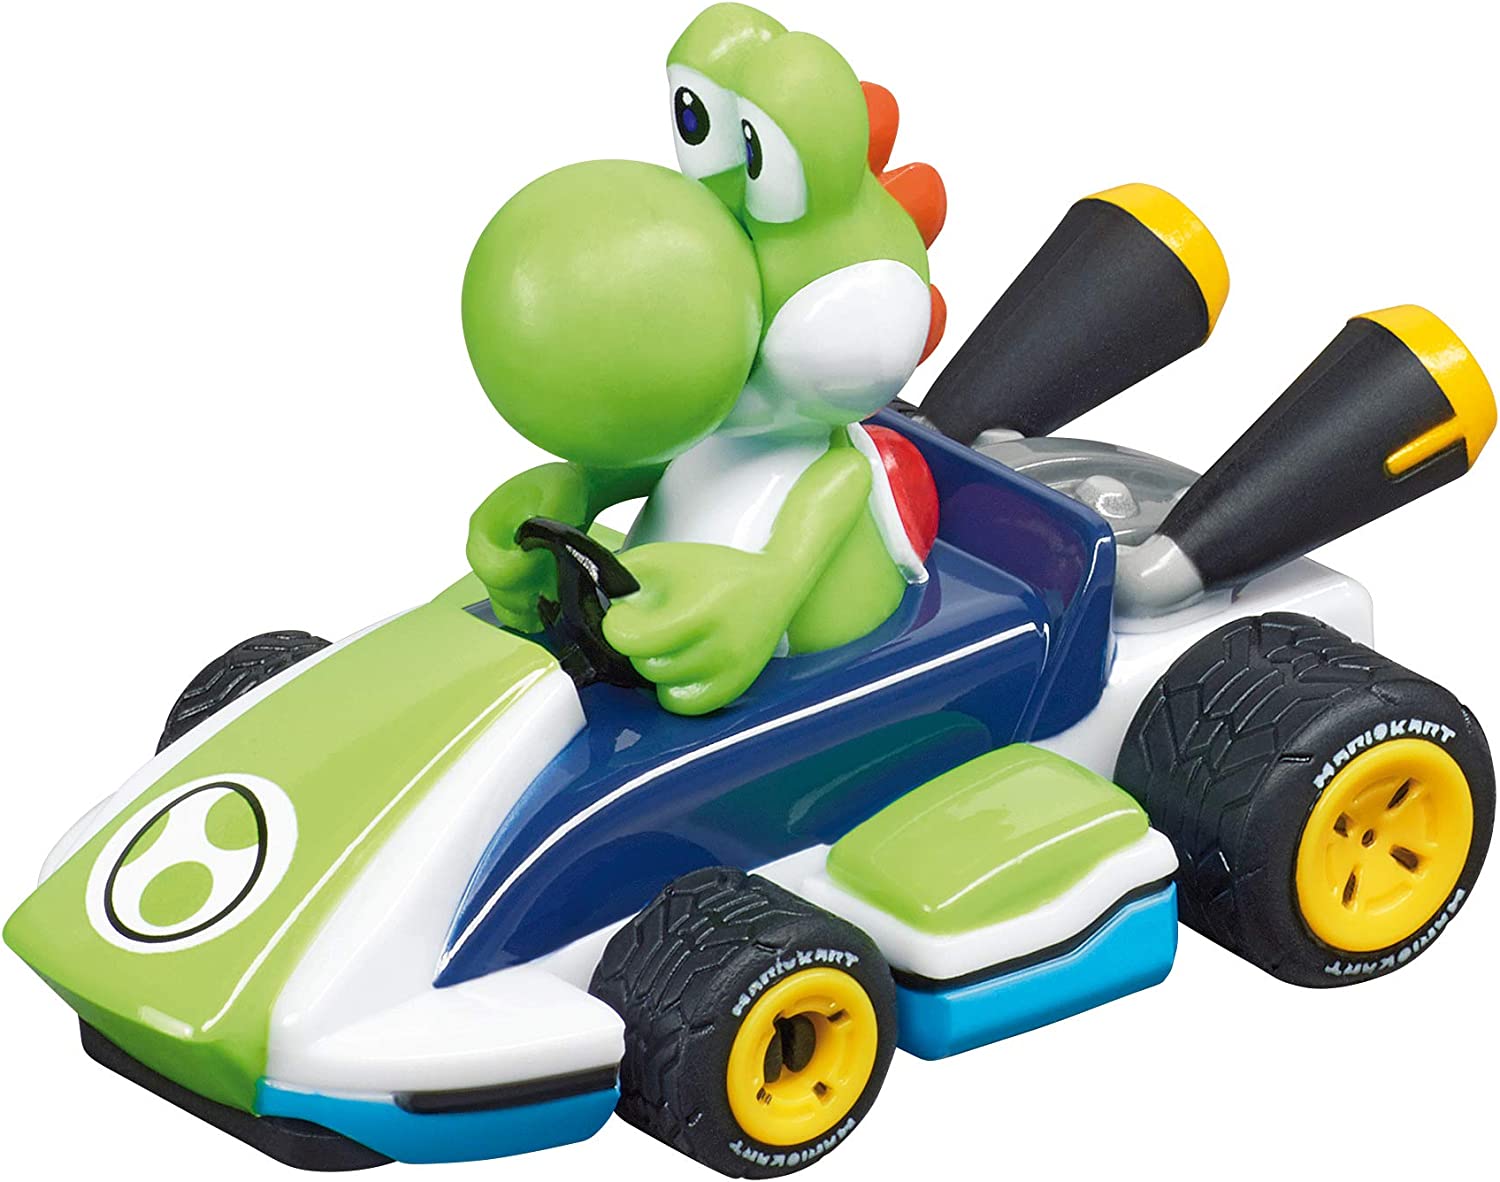 Carrera First Mario Kart Beginner Slot Car Race Track Set Featuring Mario Versus Yoshi - image 7 of 7